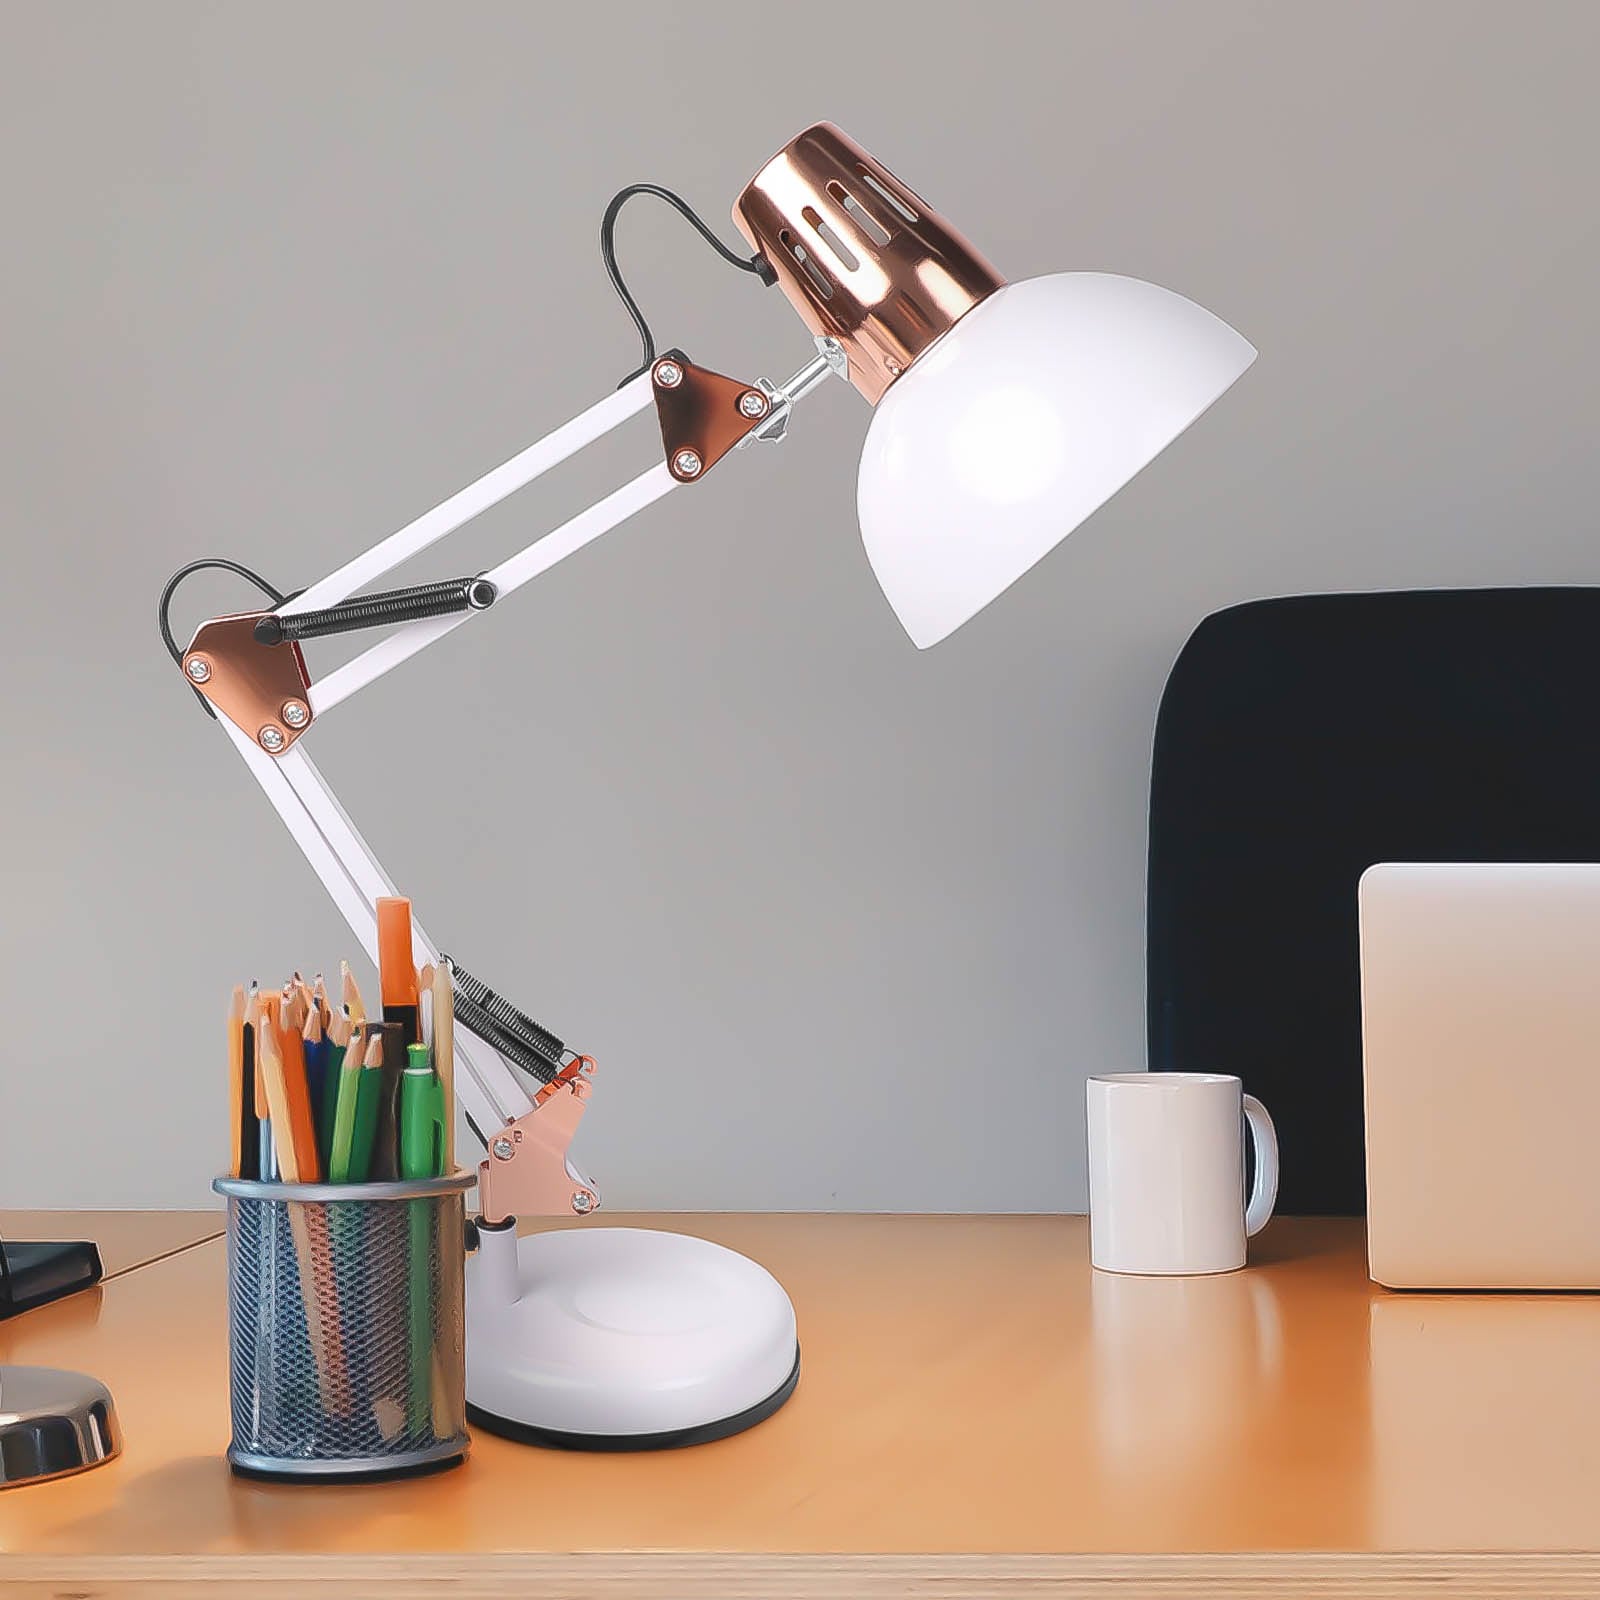 OttLite 26.875-in Black Touch Swing-Arm Desk Lamp with Plastic